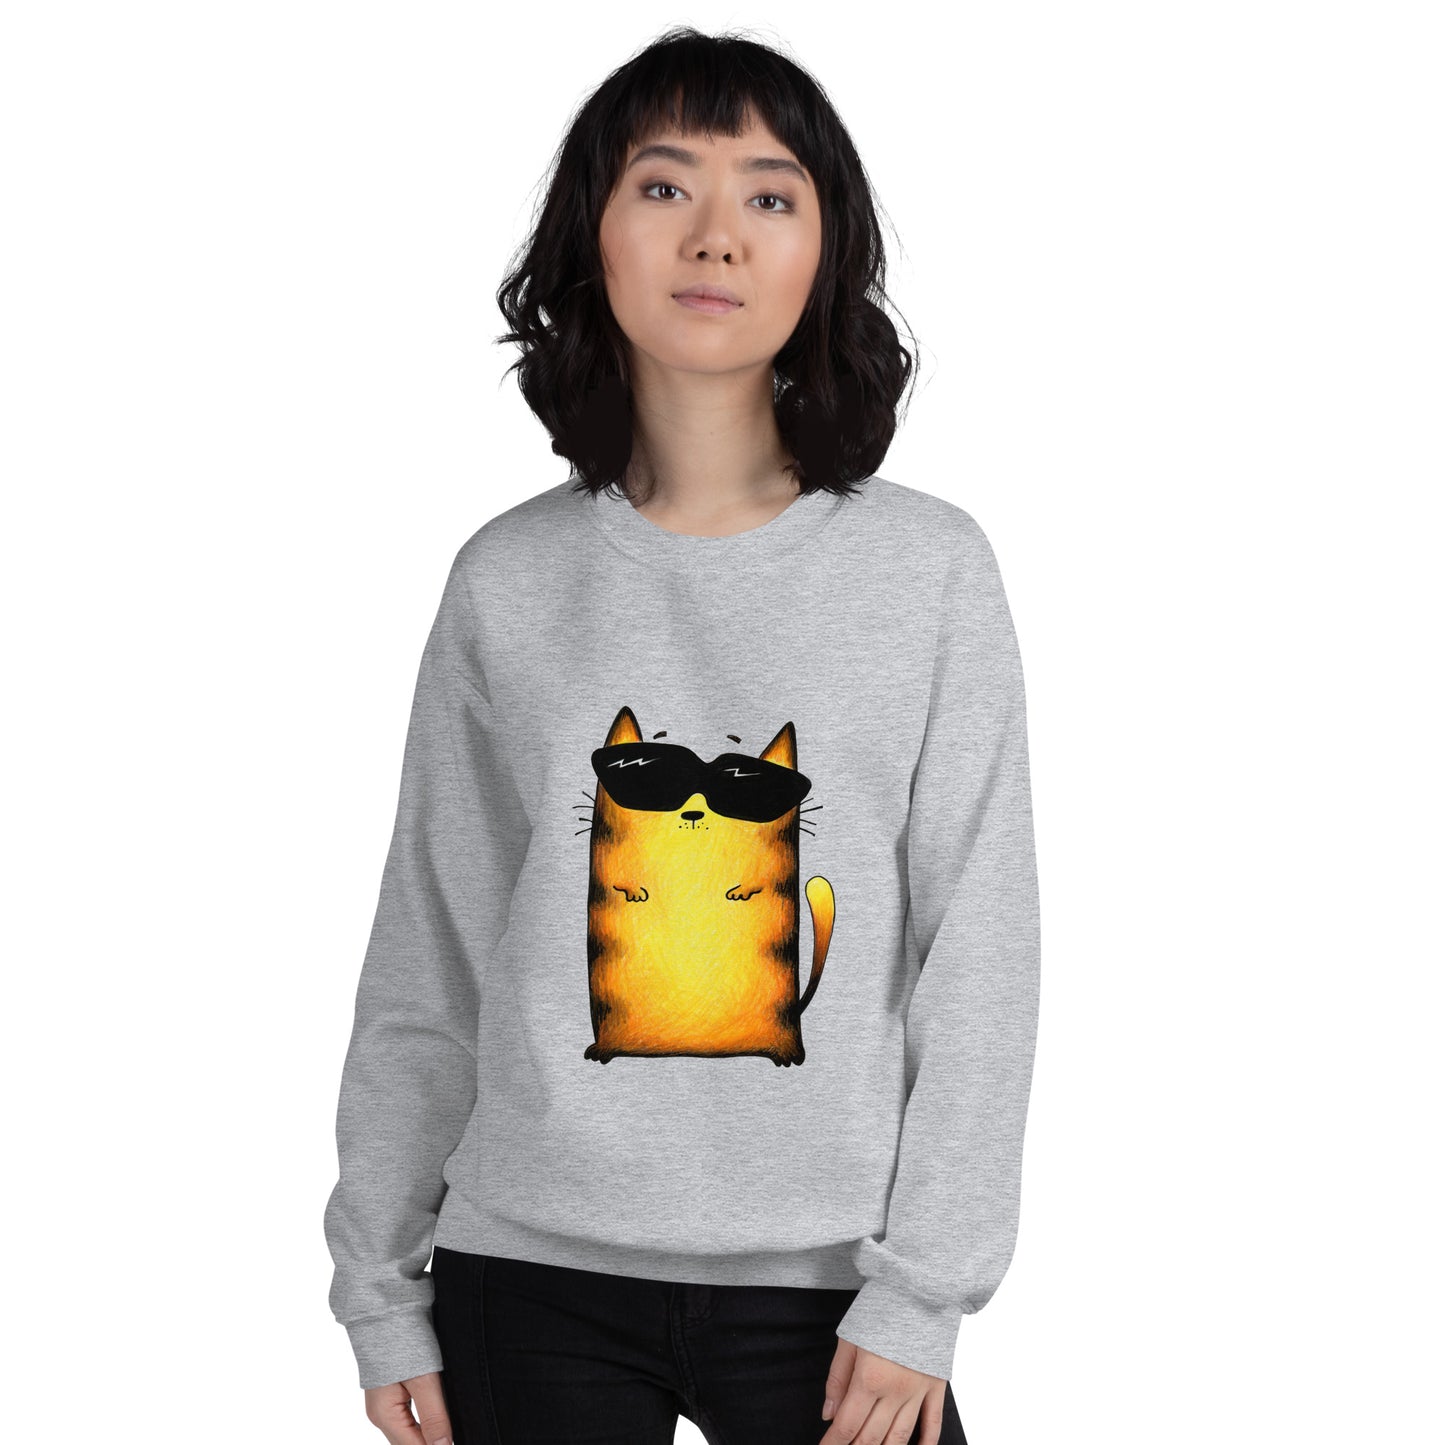 Sport gray Sweatshirt with yellow cat design